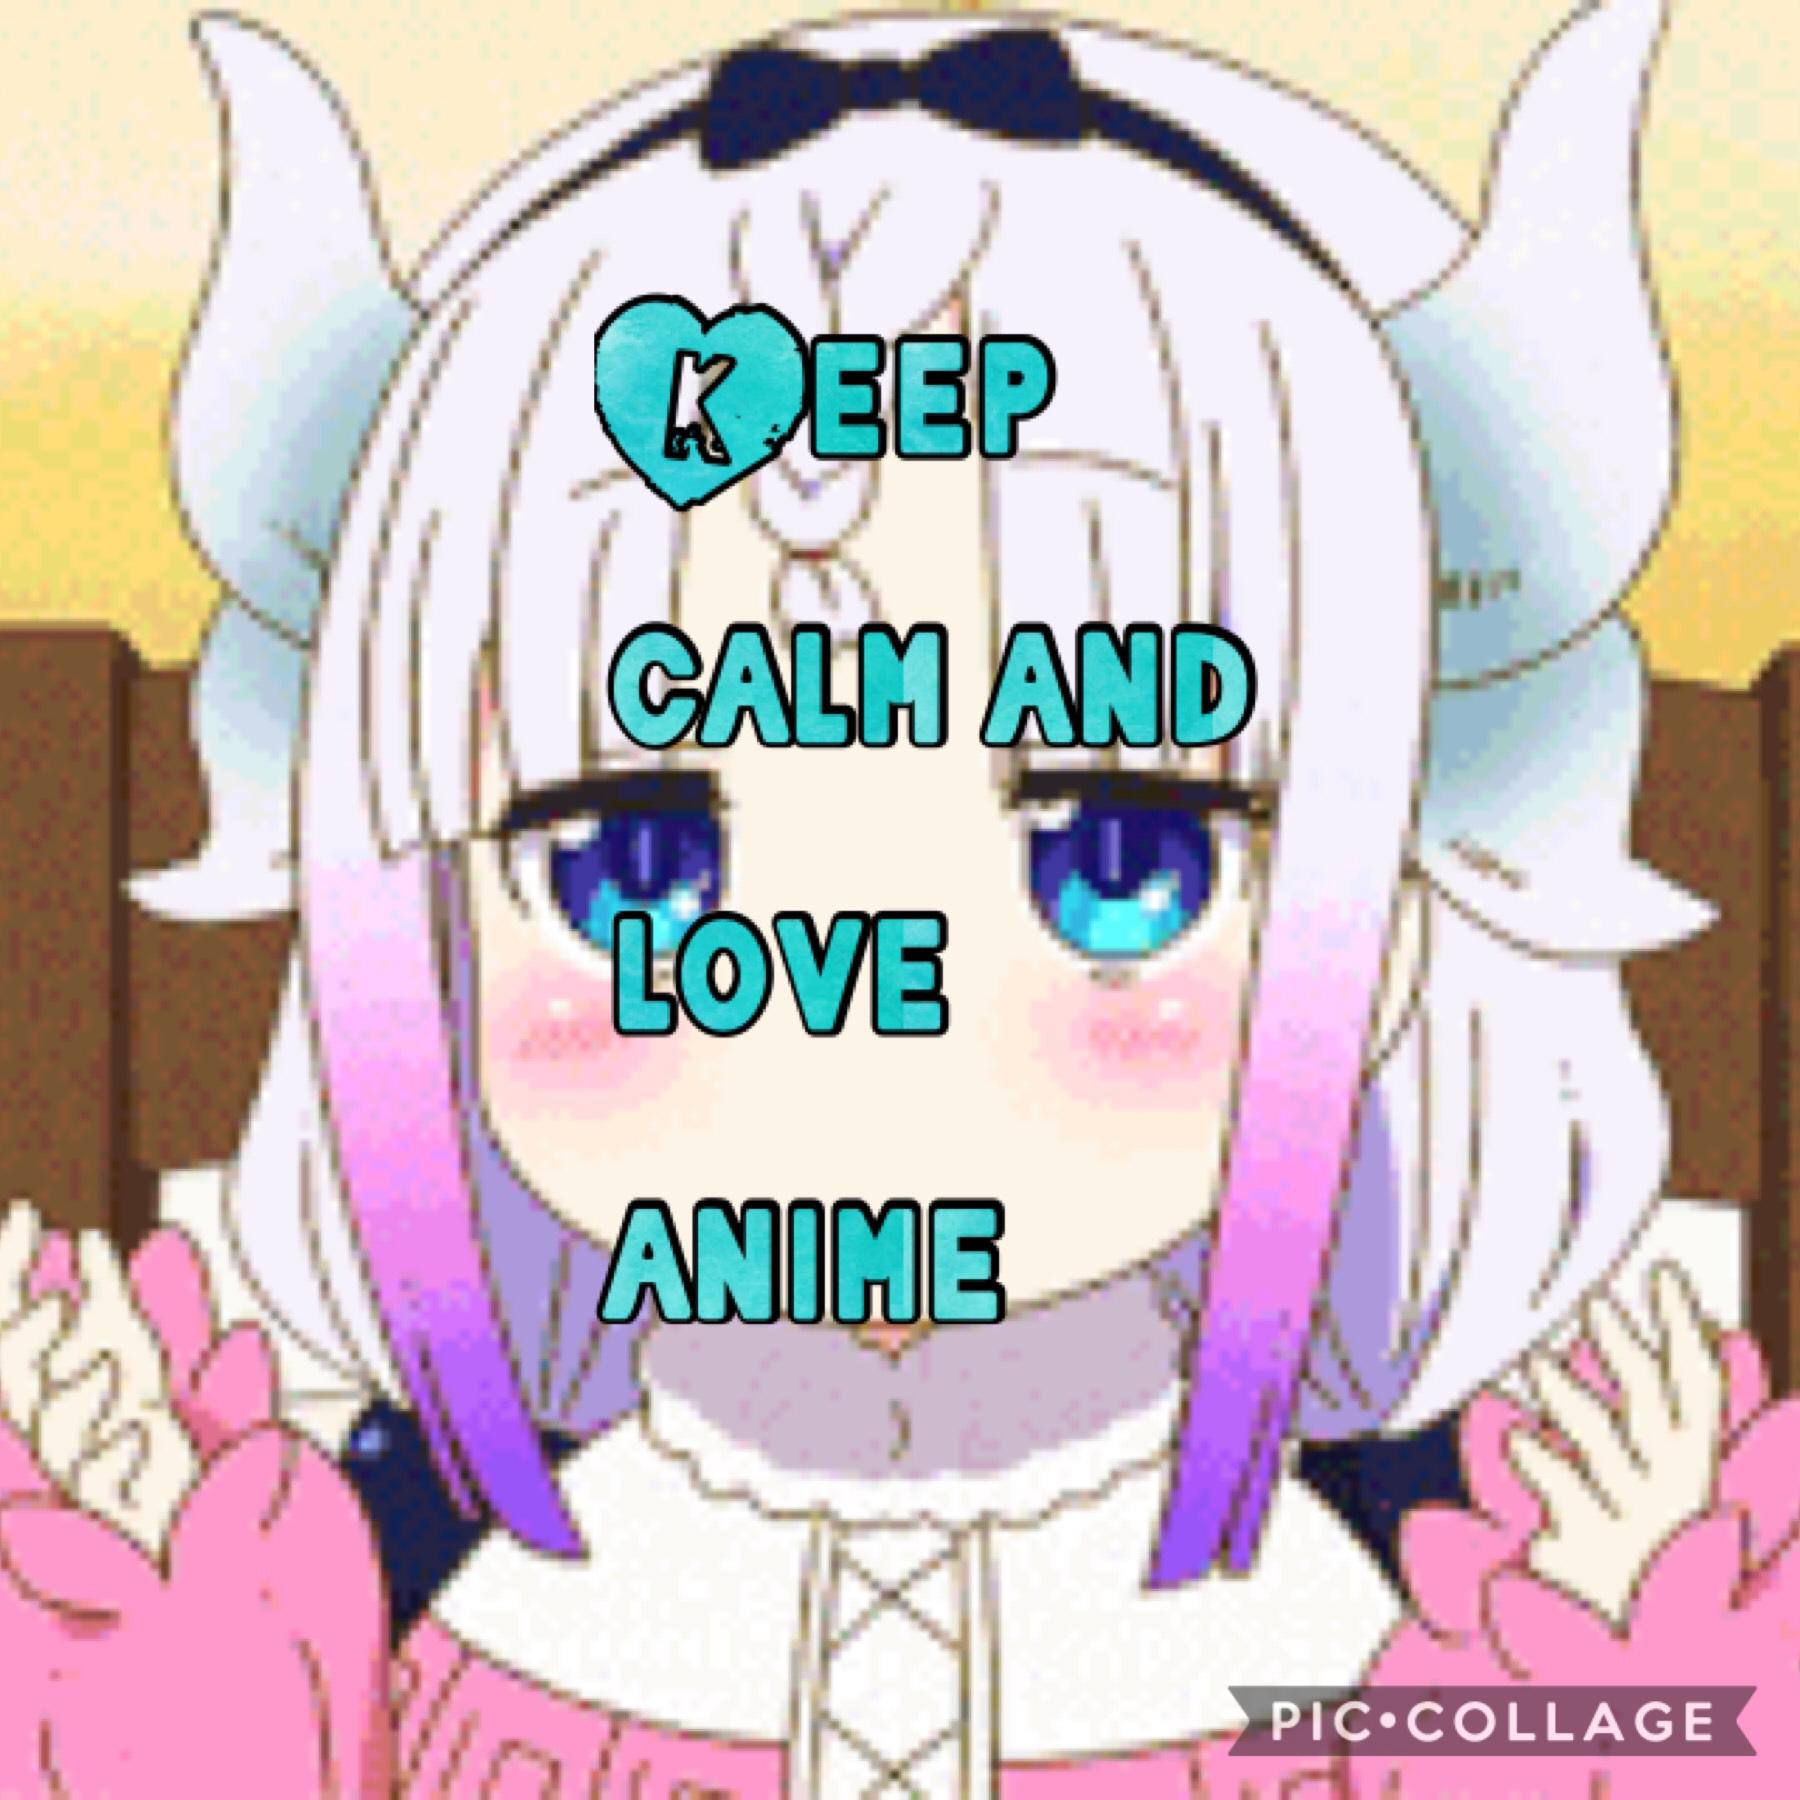 Keep calm and love anime